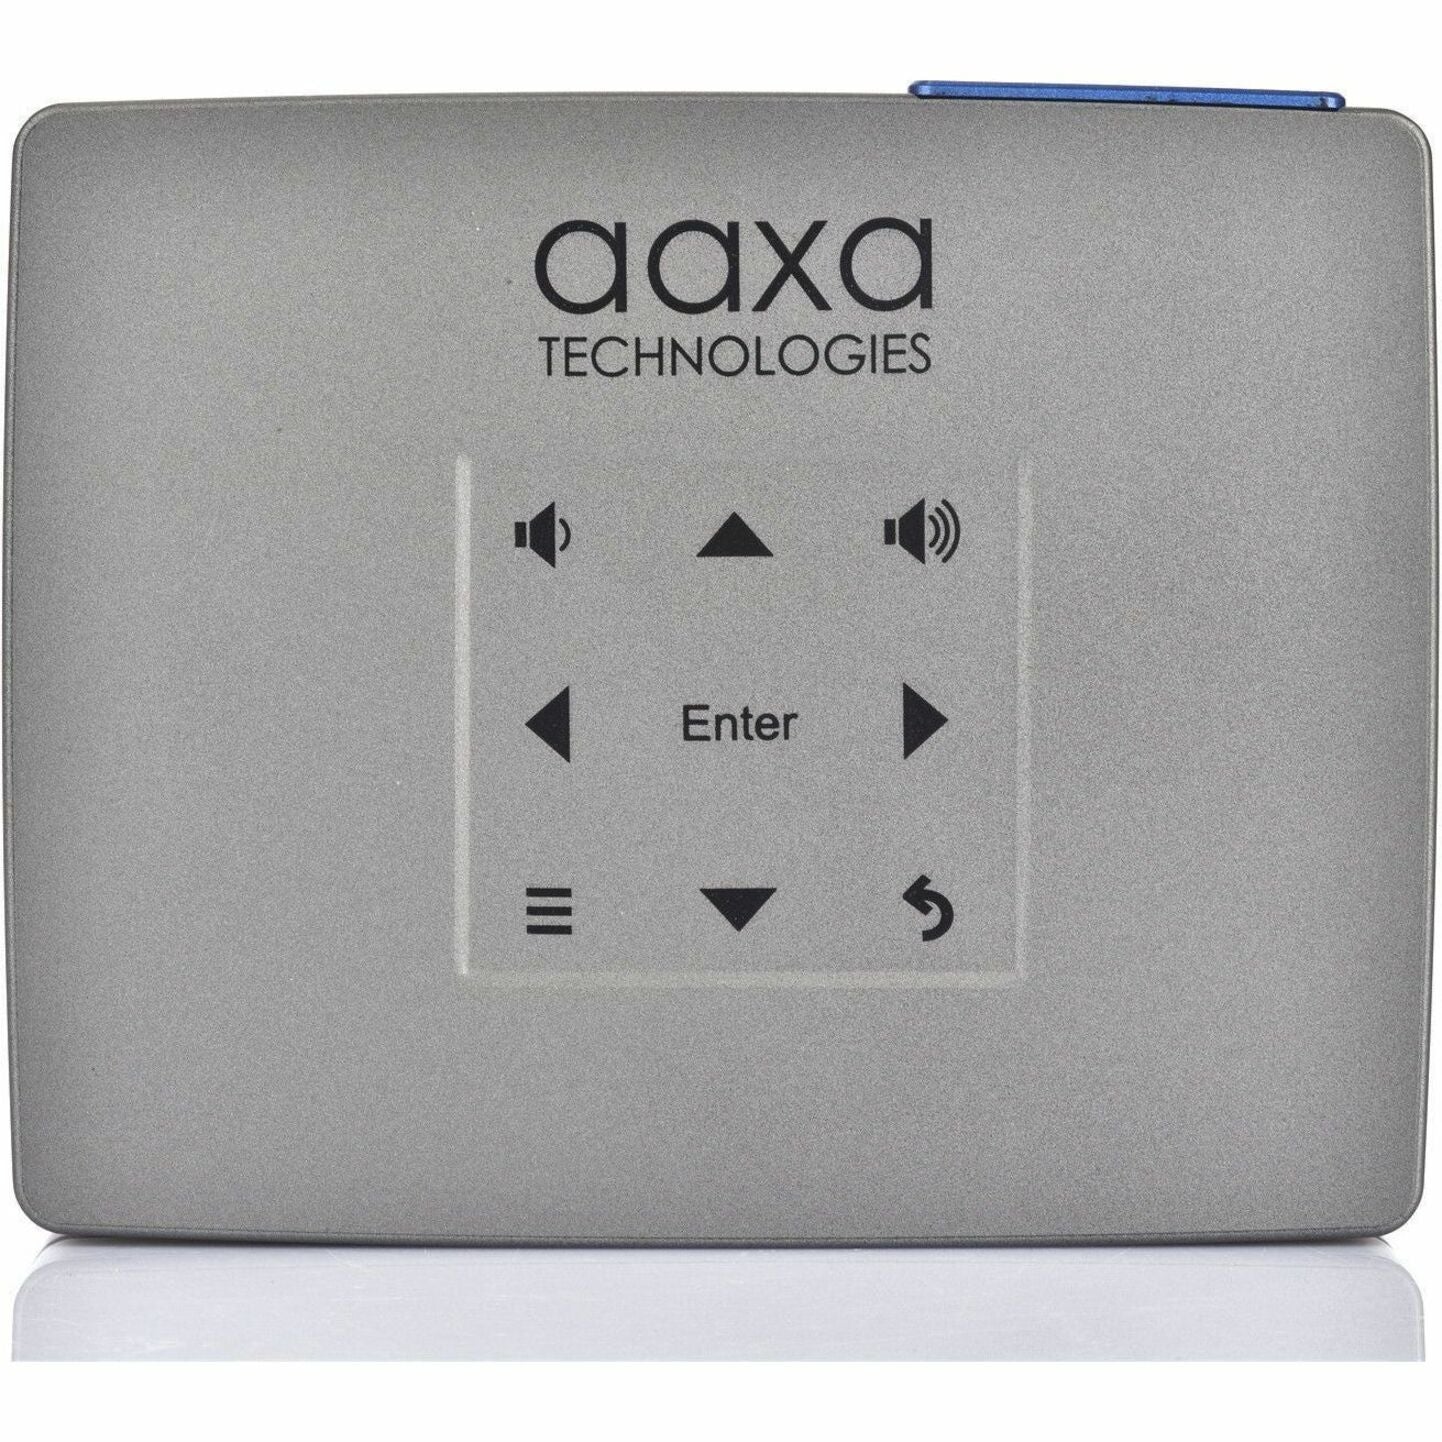 AAXA Technologies KP-450-00 SLC450 Mini Super Projector, 1080P Short-Throw Proj Smart WiFi BT Mirroring Android OS